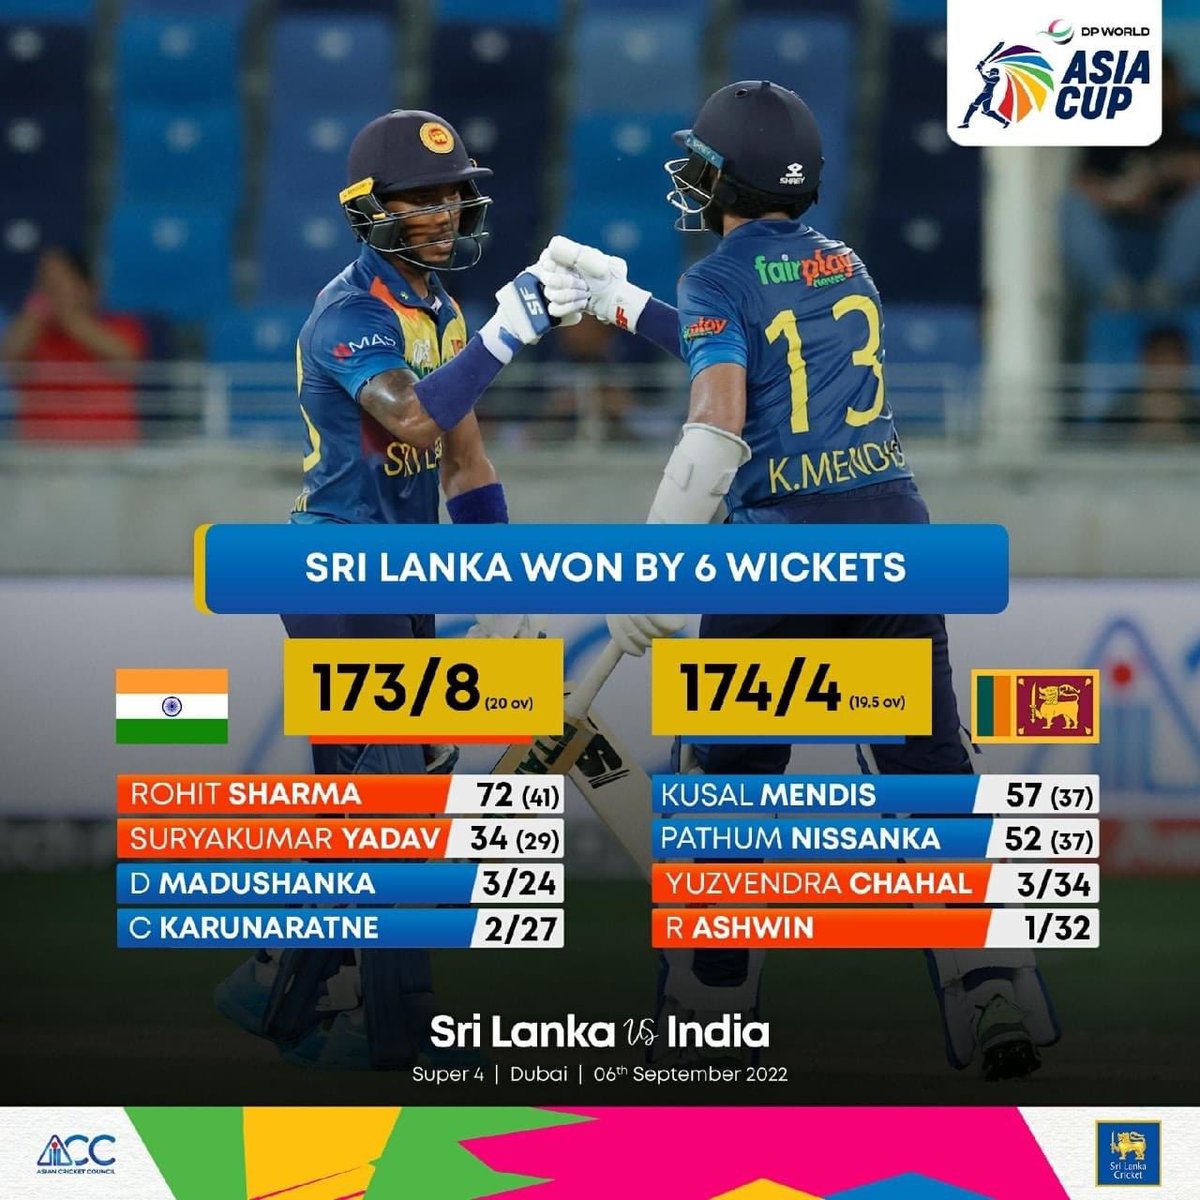 Still are you surprised that #srilanka won #AsiaCup 5times @GautamGambhir ?